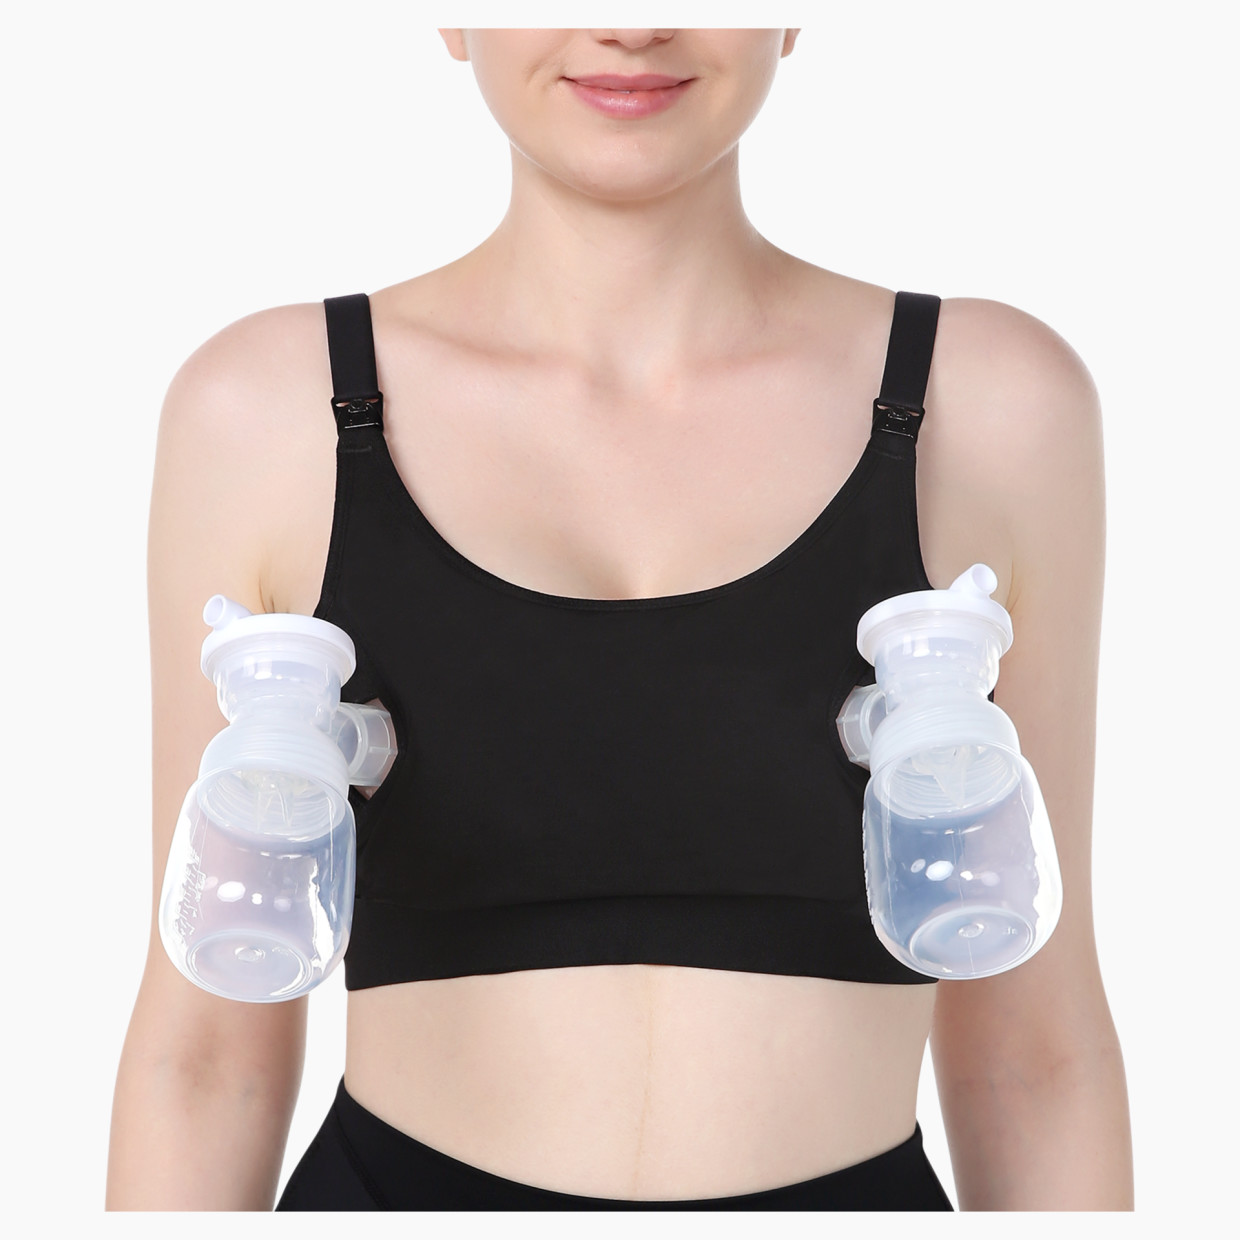 Hands Free Pumping Bra, Momcozy Adjustable Breast-pump Holding And Nursing  Bra